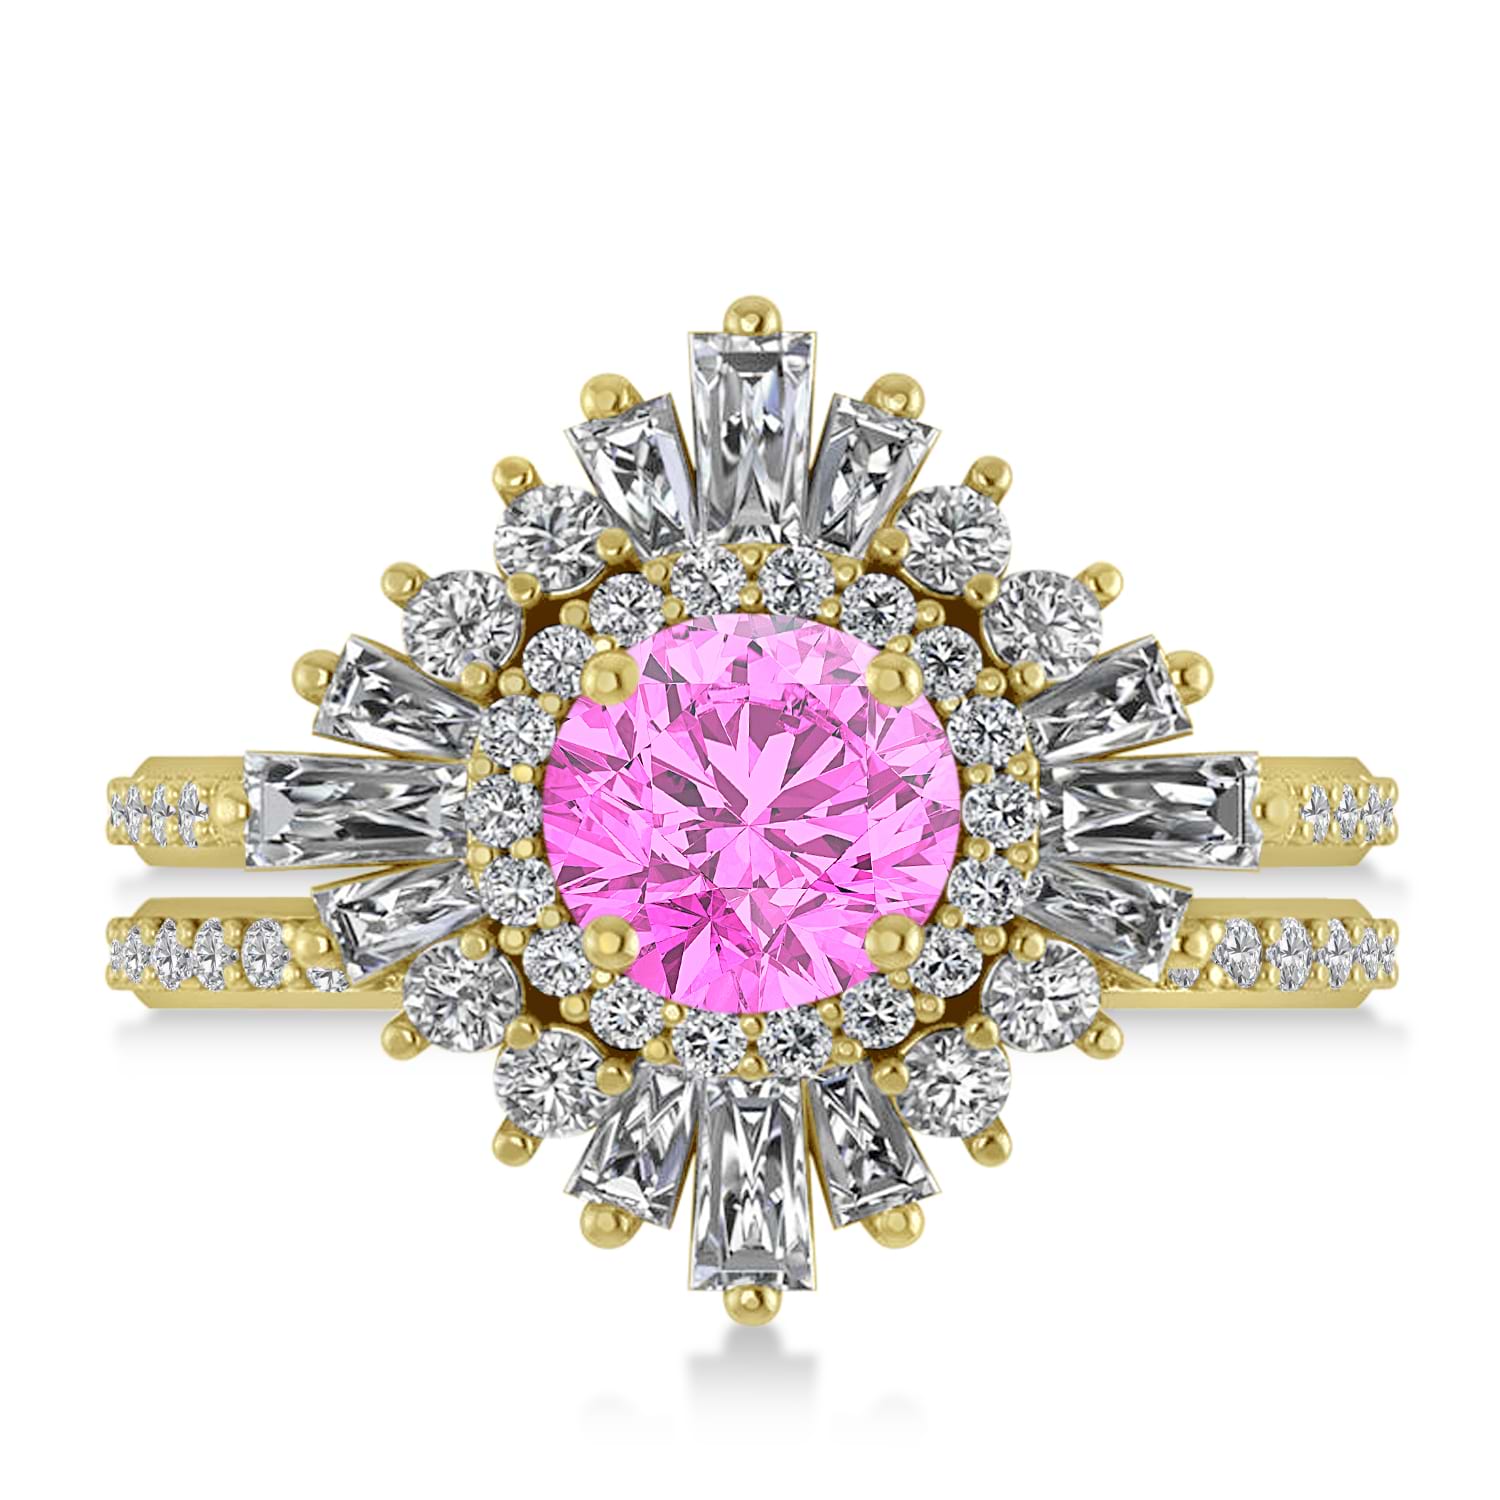 Pink Sapphire & Diamond Ballerina Engagement Ring 18k Yellow Gold (2.74 ctw)